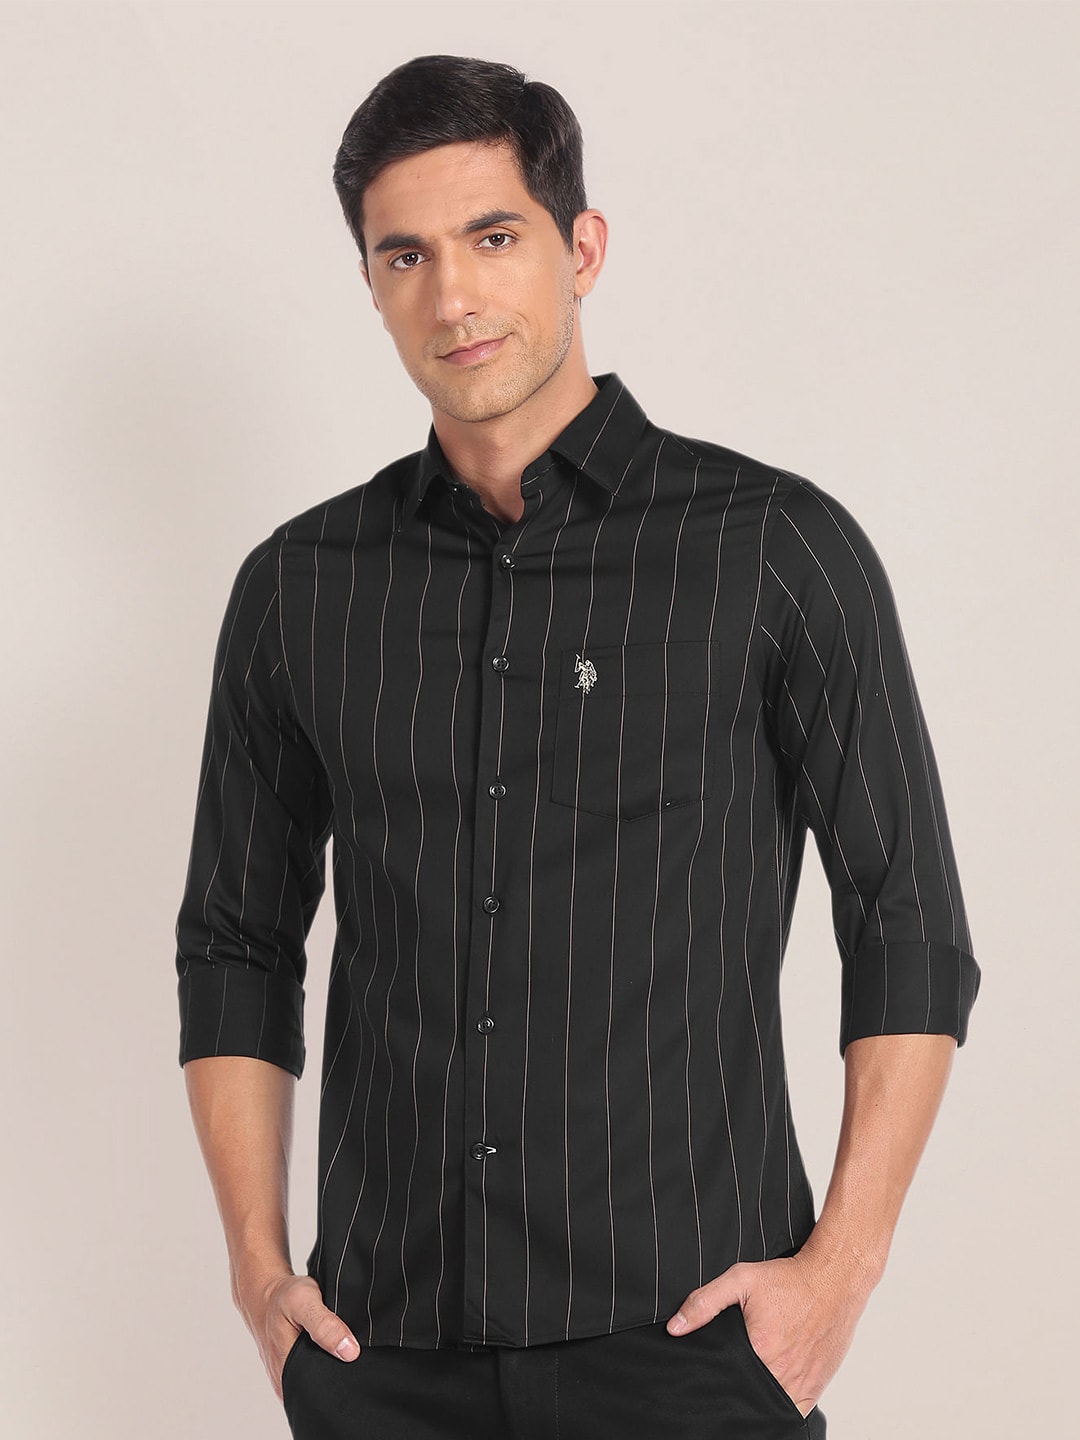 U.S. Polo Assn. Vertical Striped Twill Weave Casual Shirt